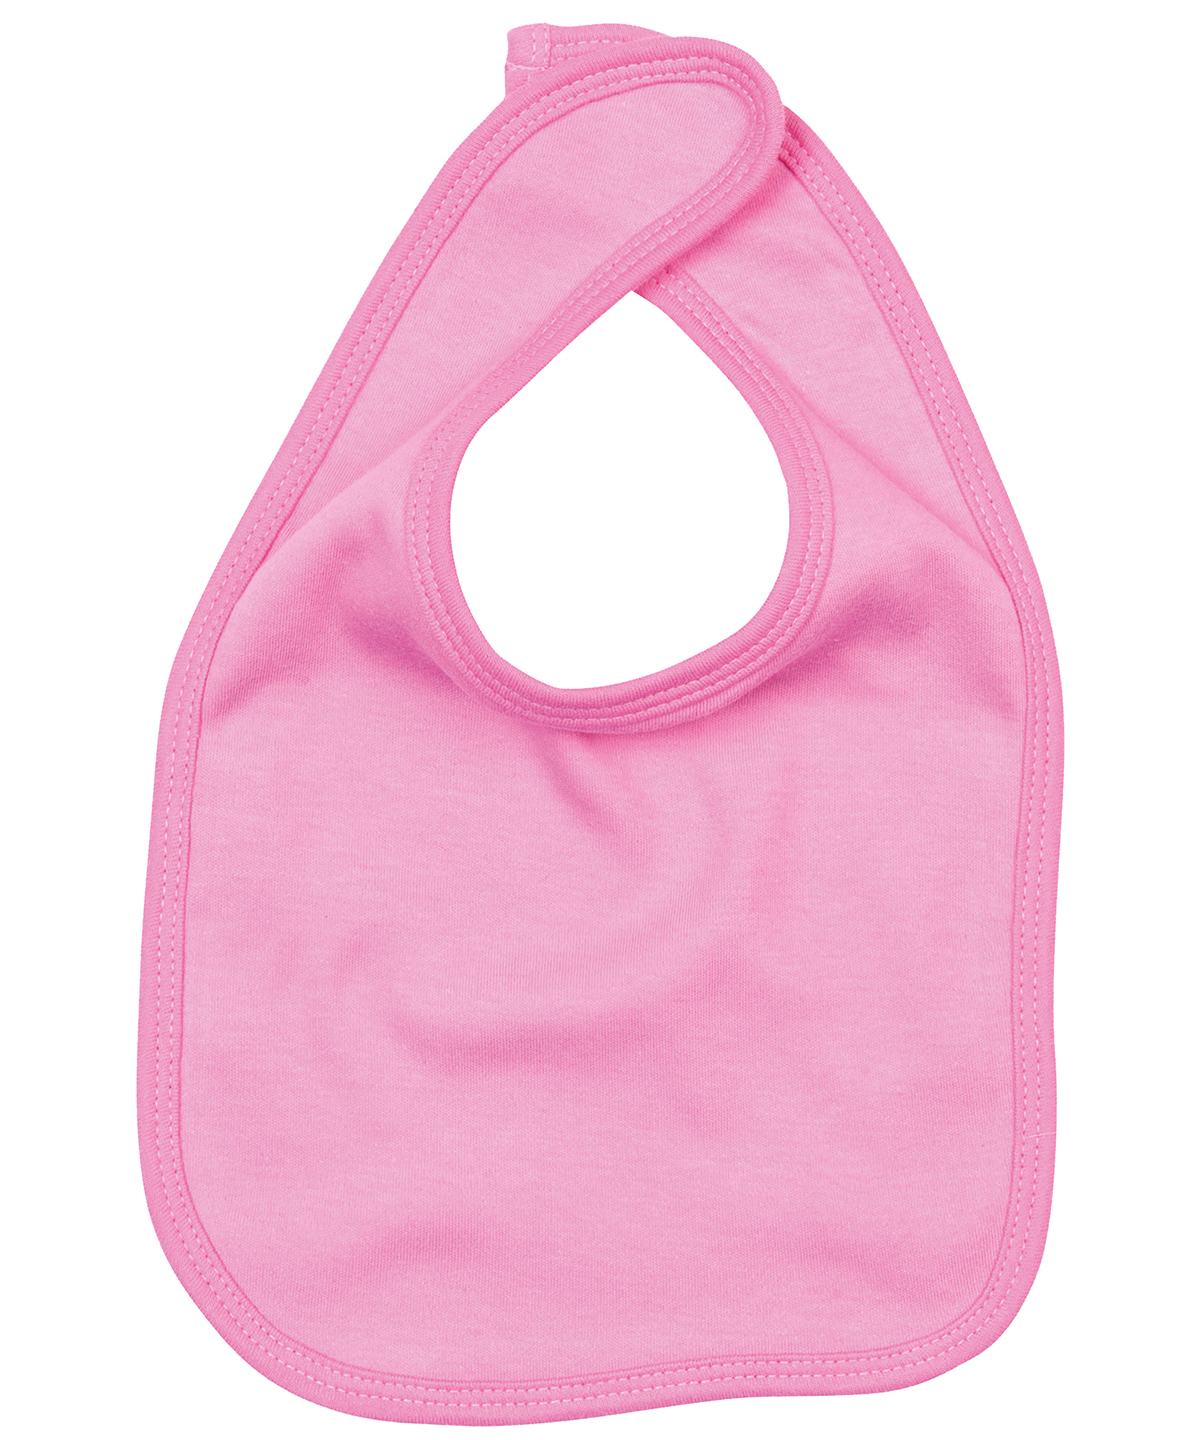 Baby Bib Bubblegum Pink Size One Size